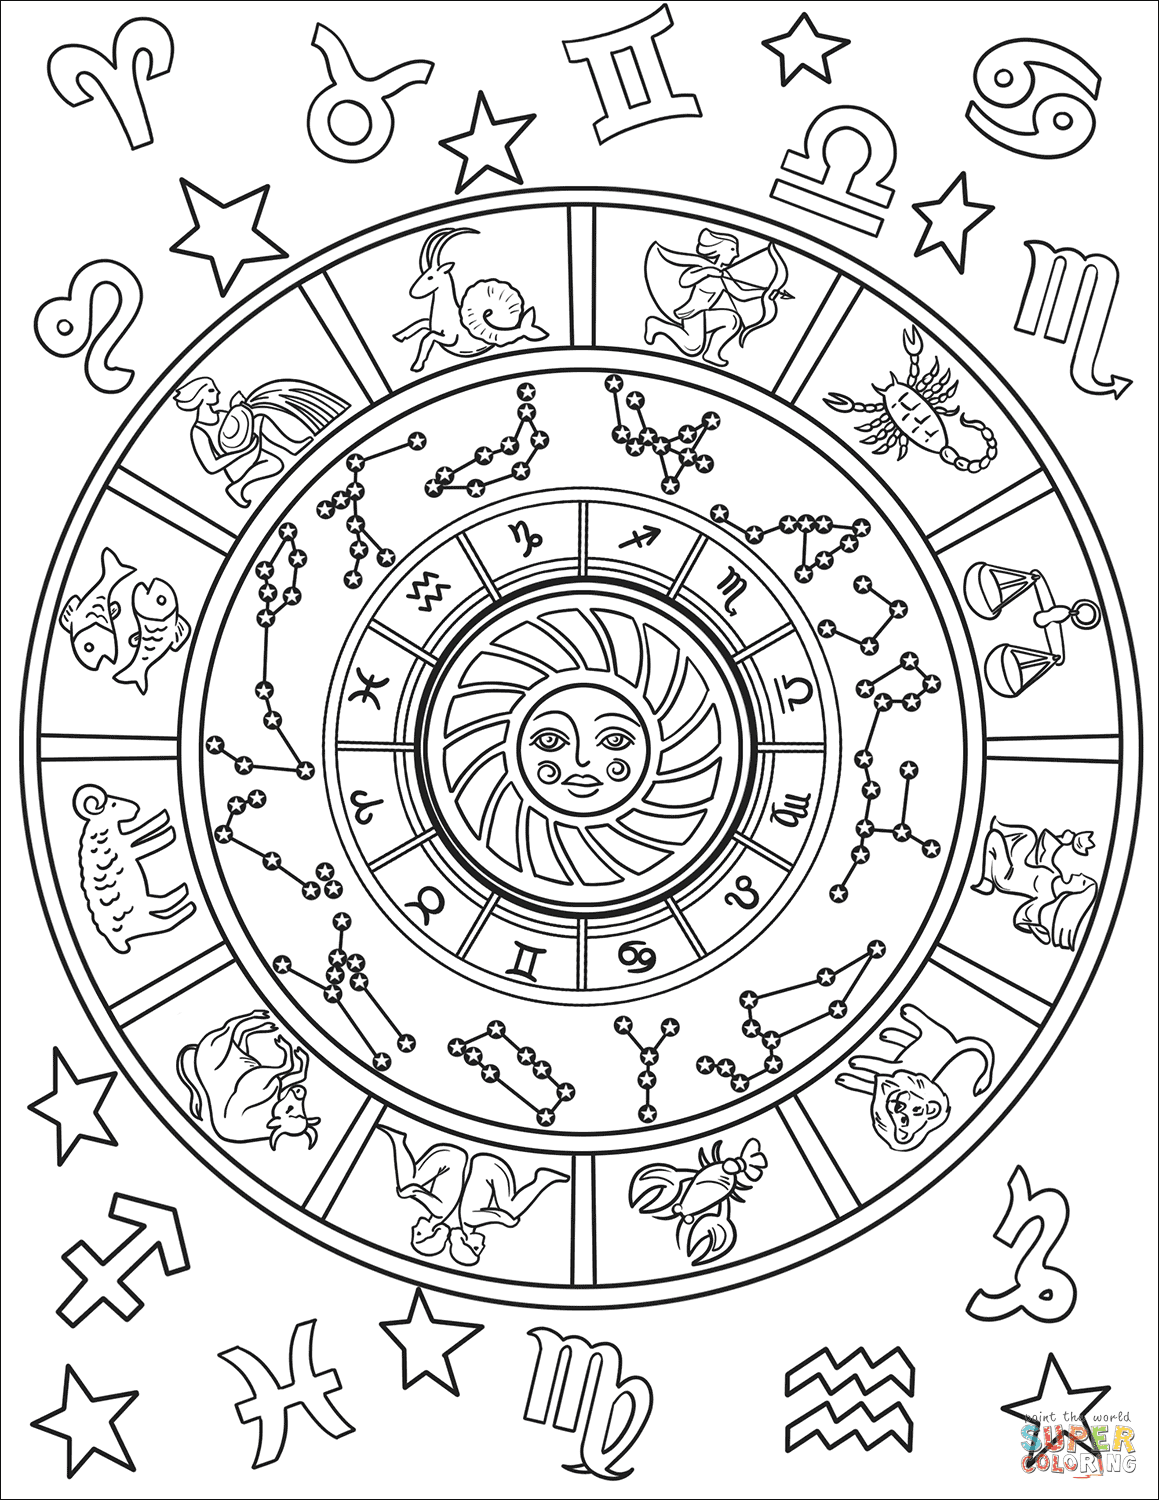 Libra zodiac sign coloring page | free printable coloring pages. 12 Astrological Signs Coloring Page Free Printable Coloring Pages